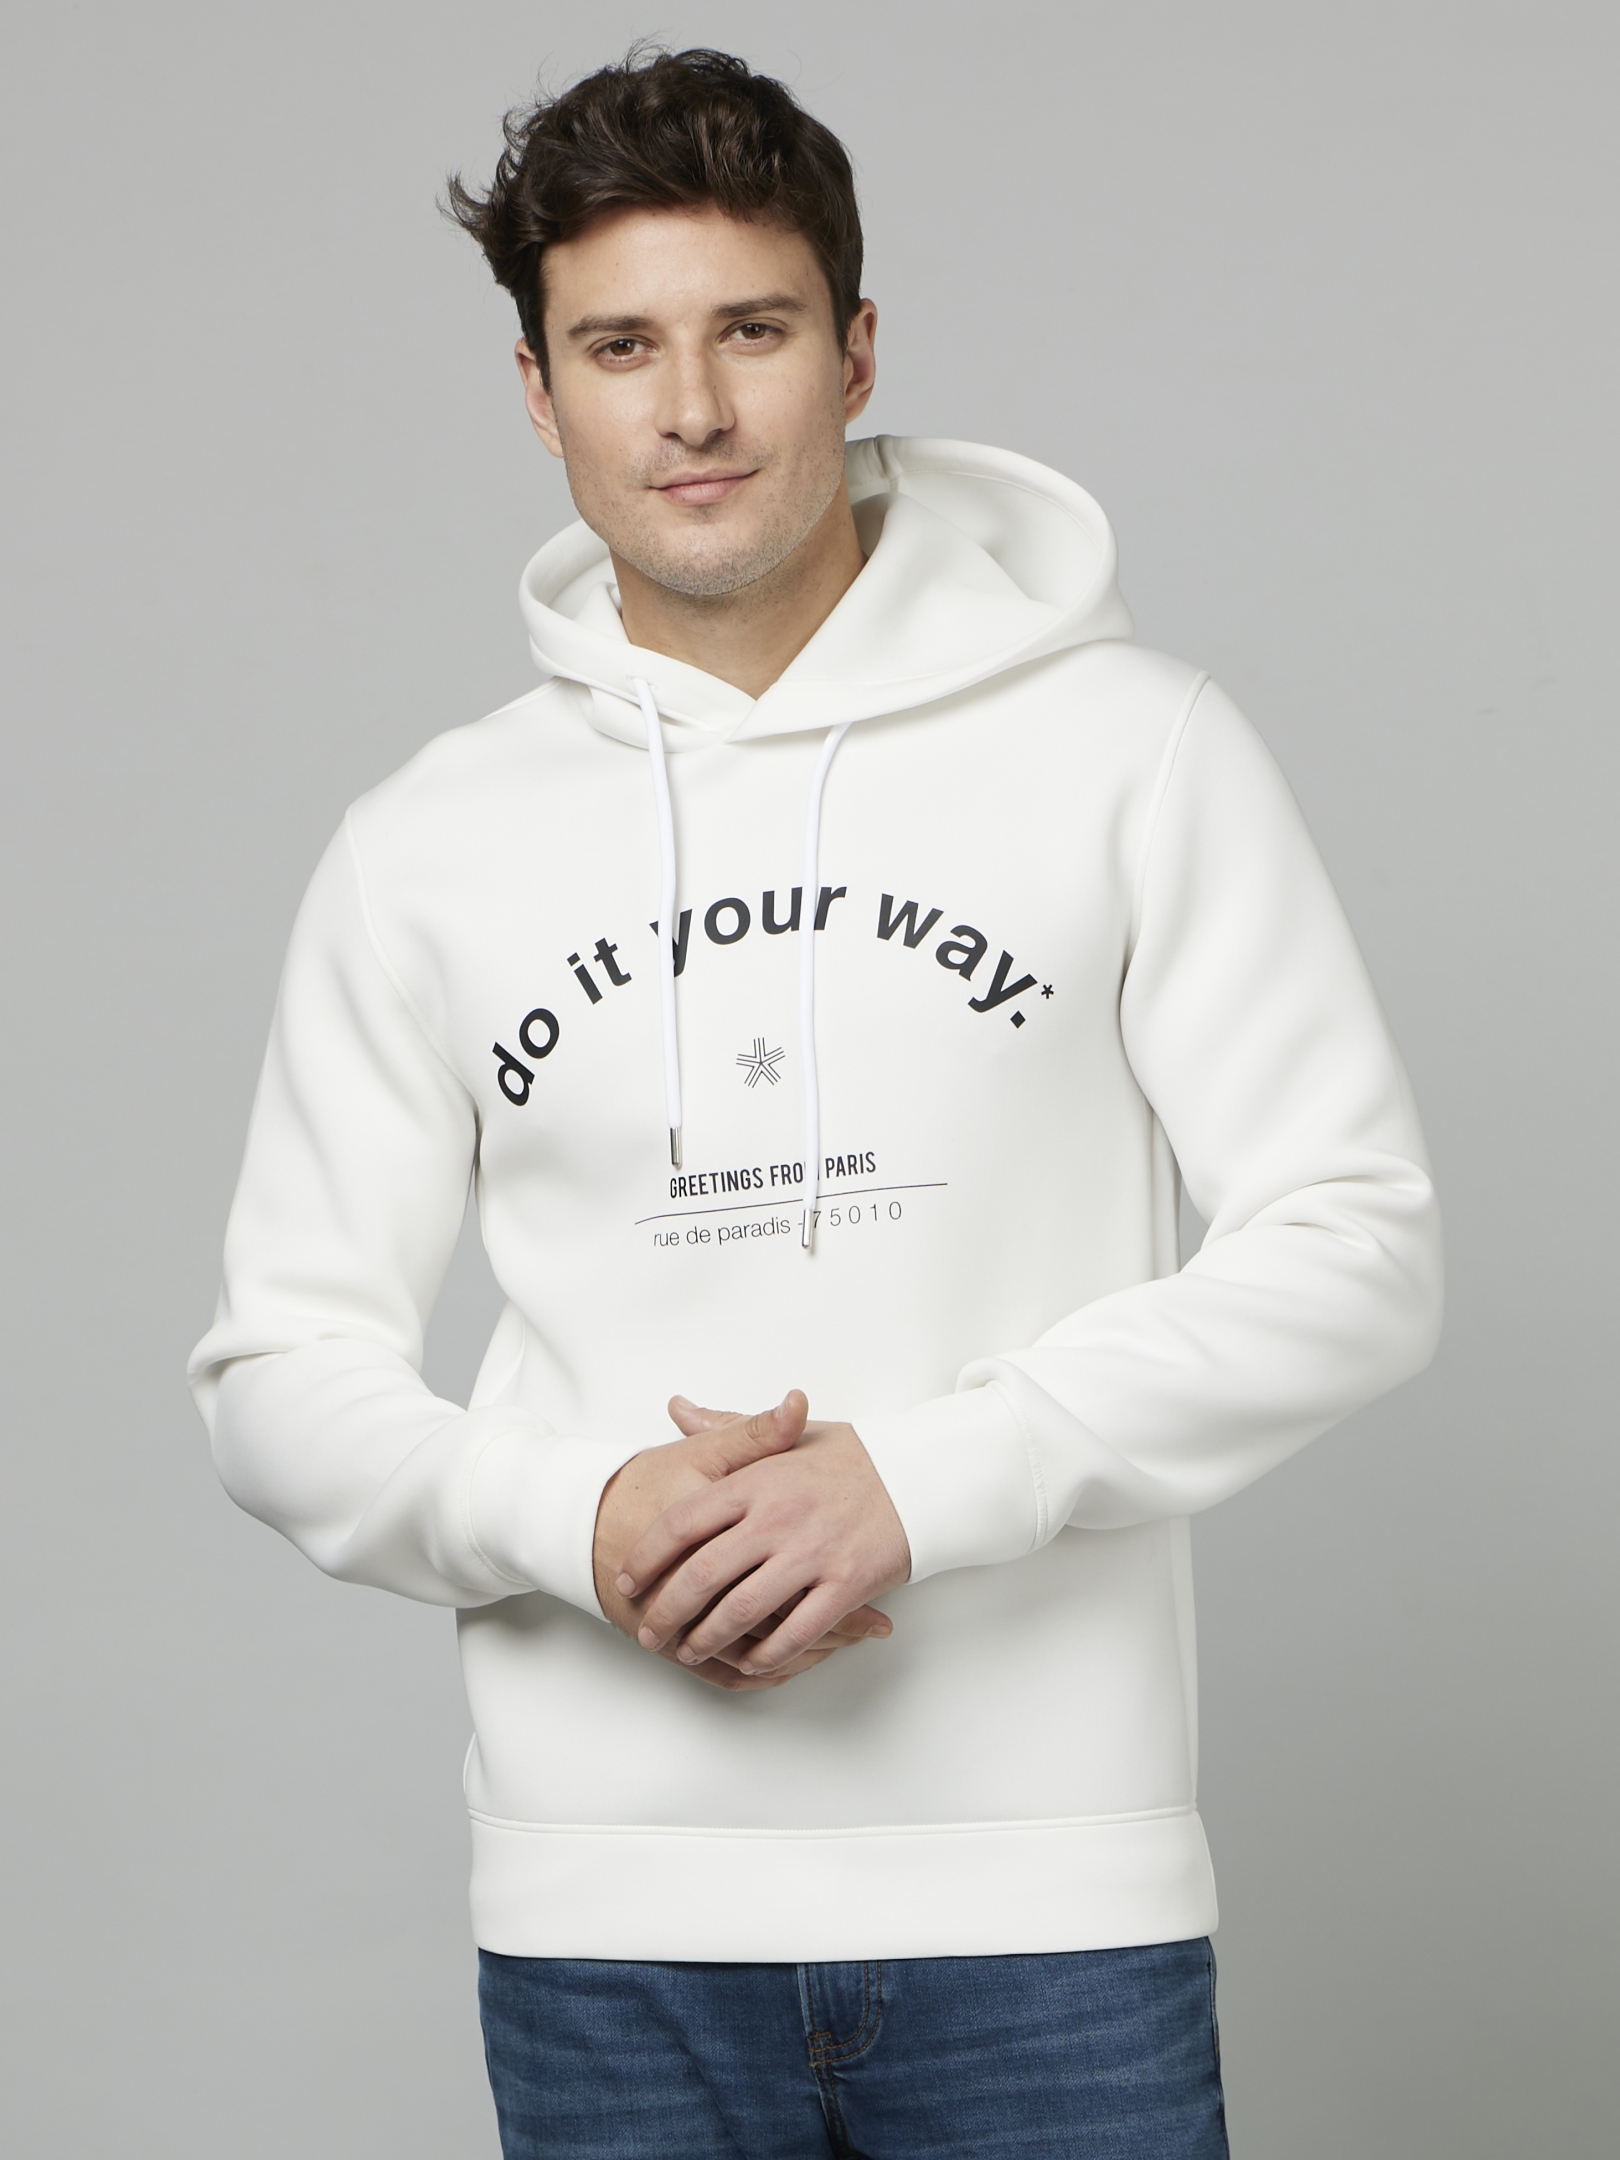 Men's White Graphics Sweatshirts